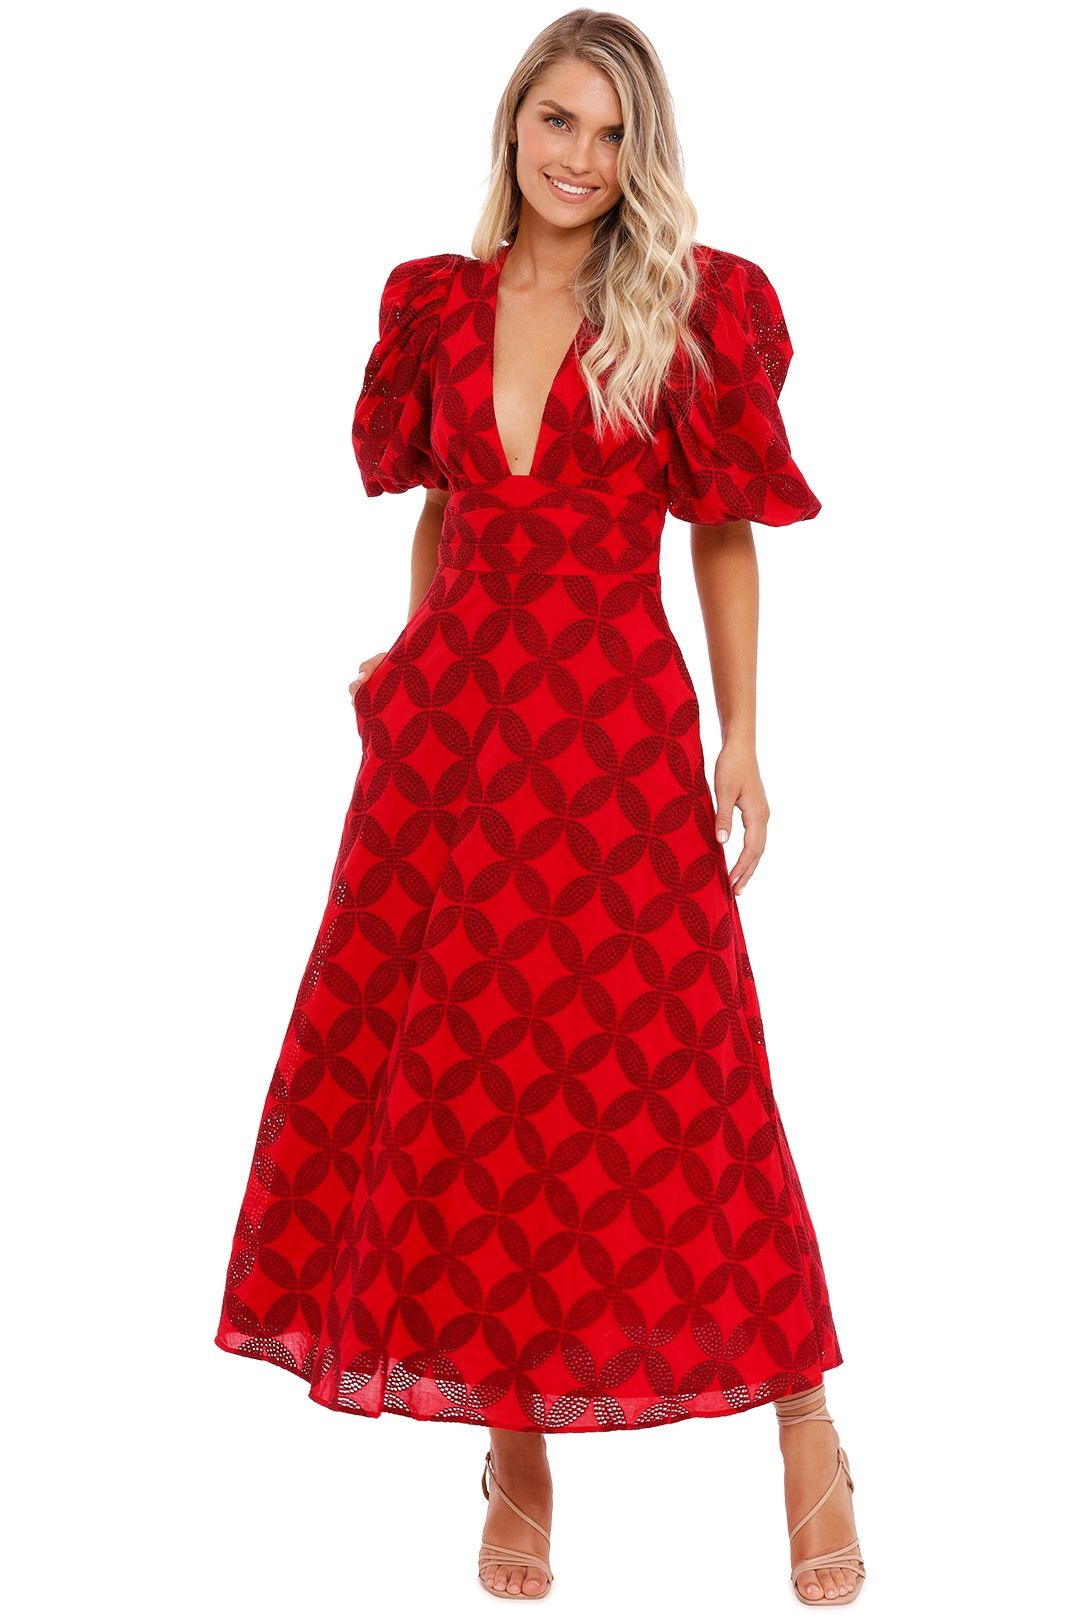 ACLER - Hamilton Dress - Red